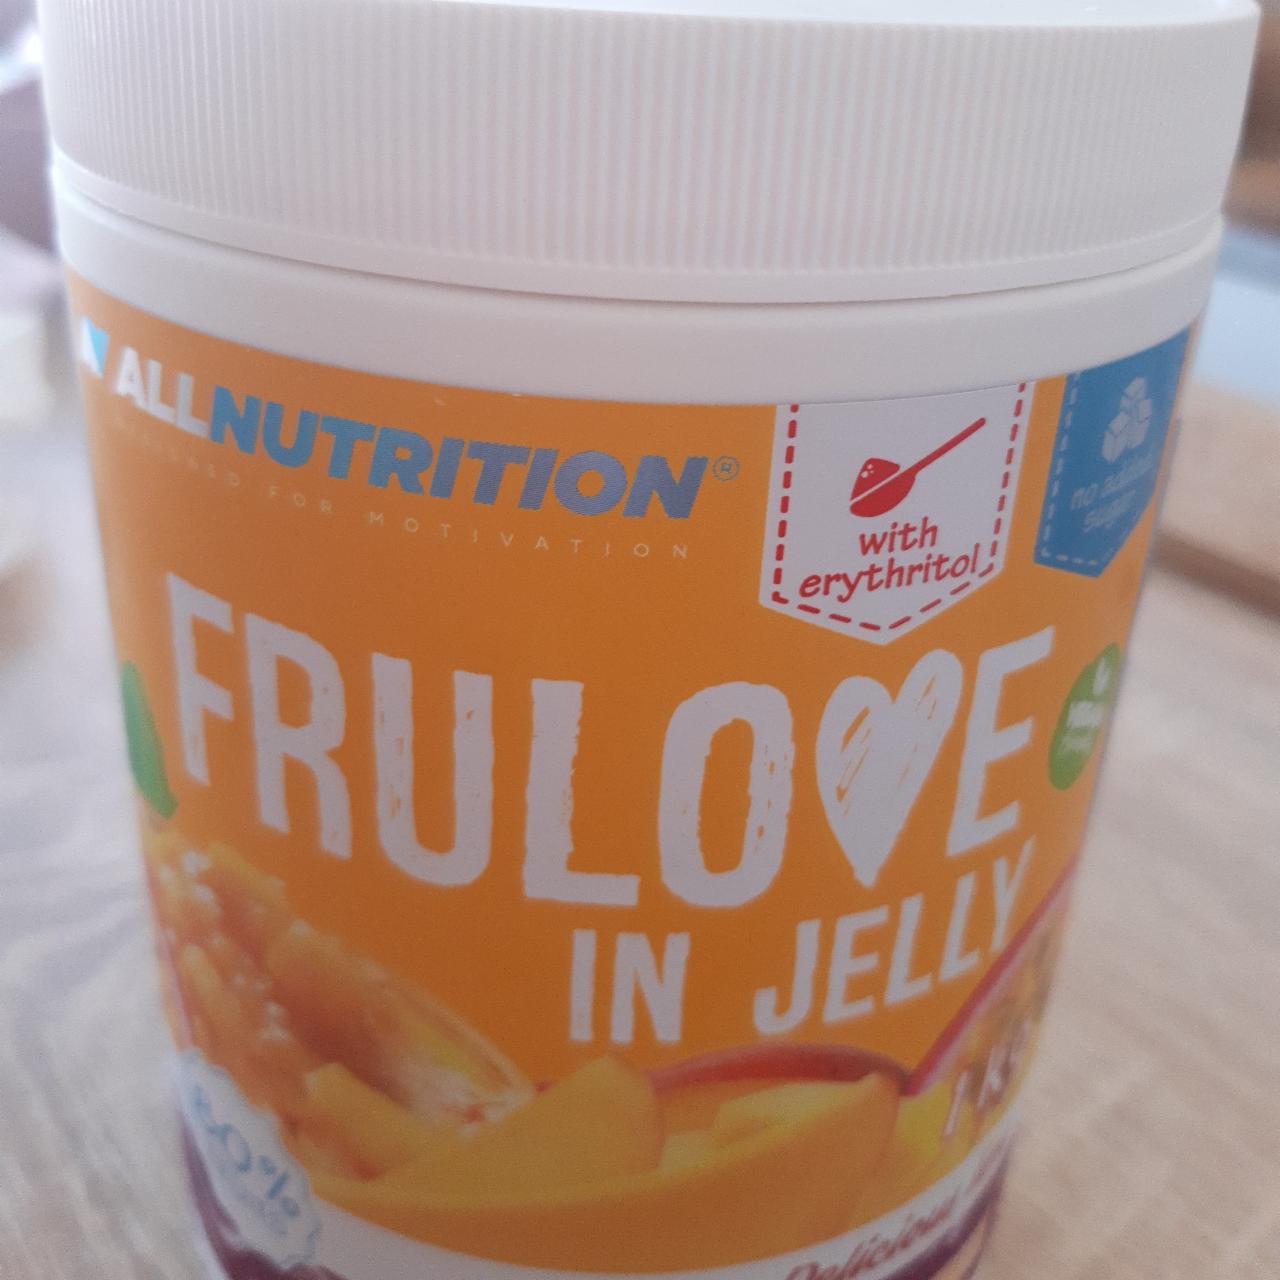 Fotografie - Frulove in Jelly mango & passion fruit Allnutrition